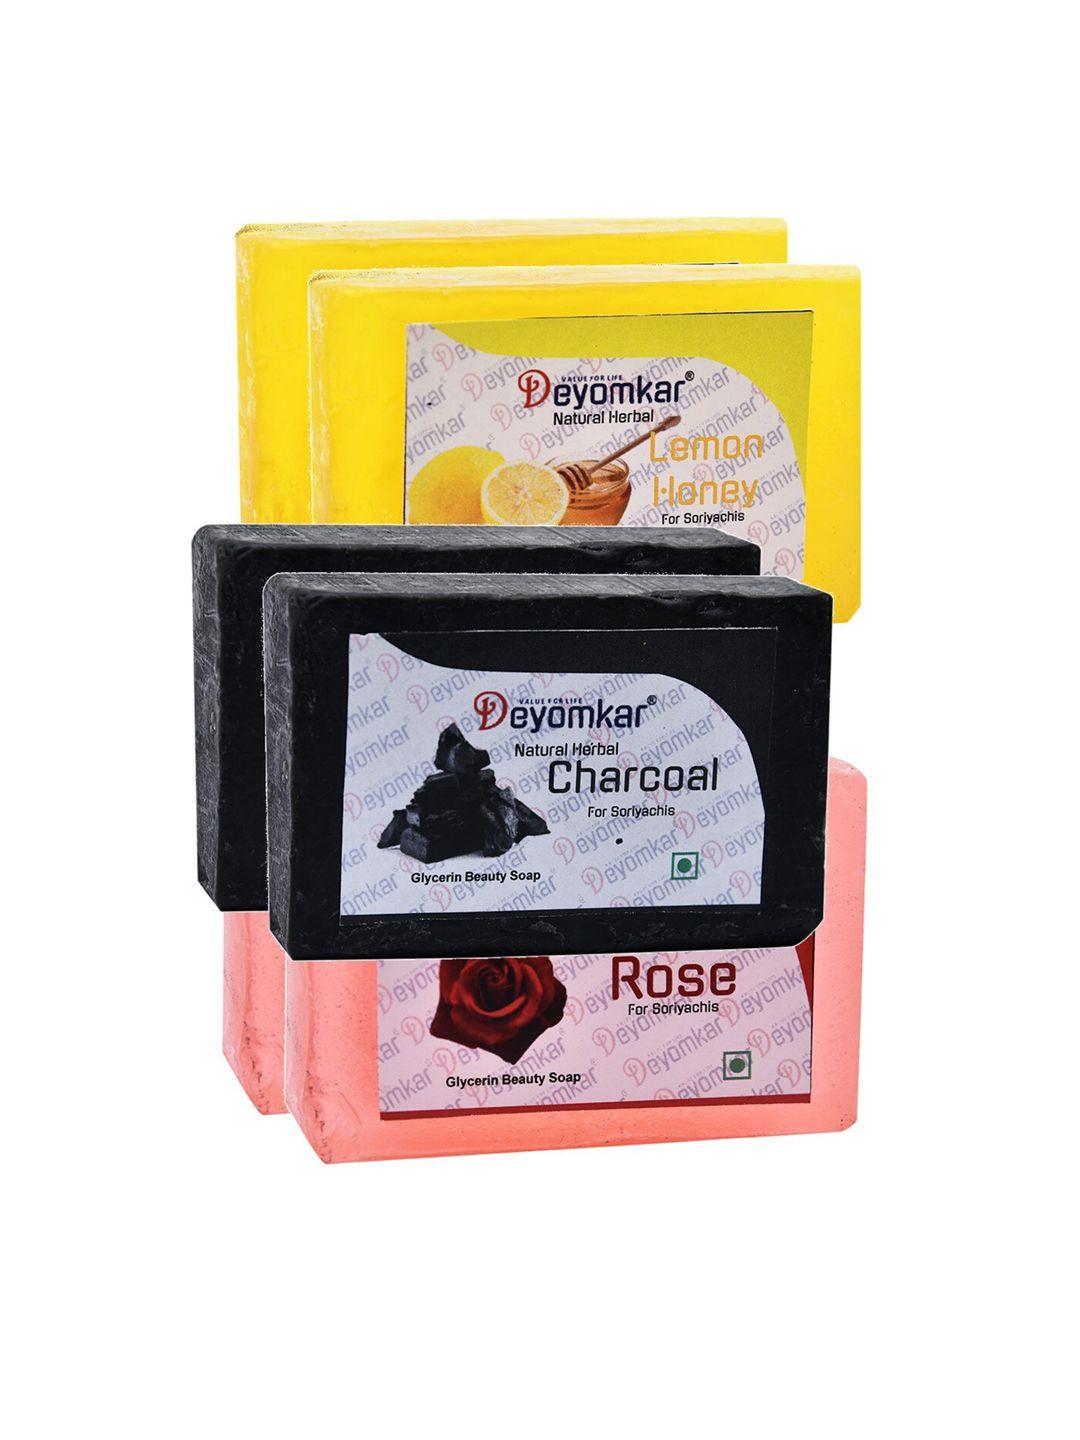 deyomkar set of 6 handmade soap